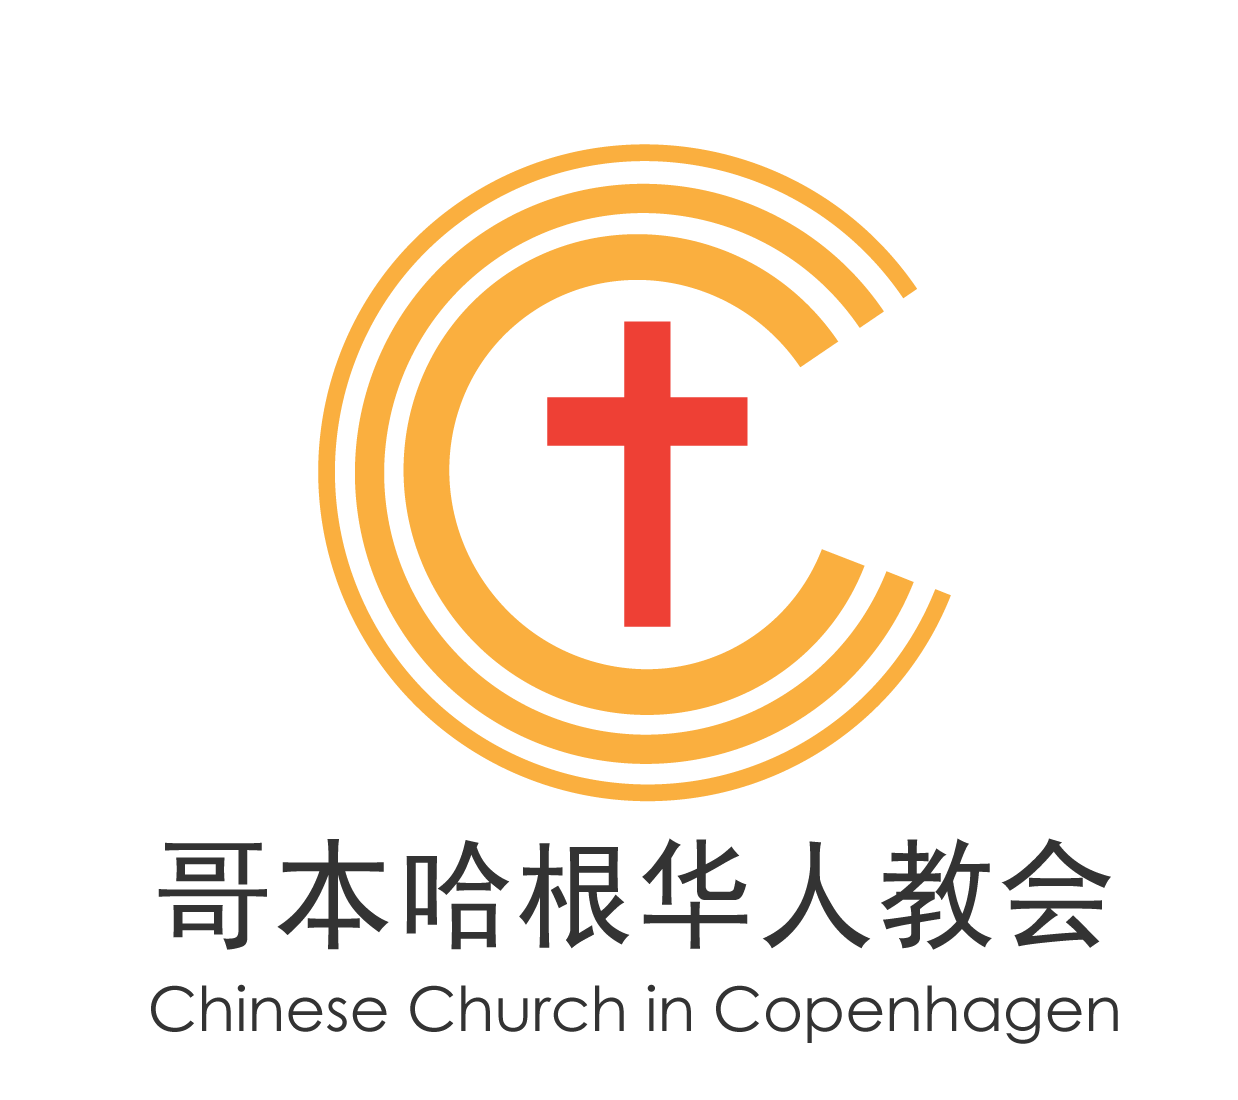 Chinese Church in Copenhagen